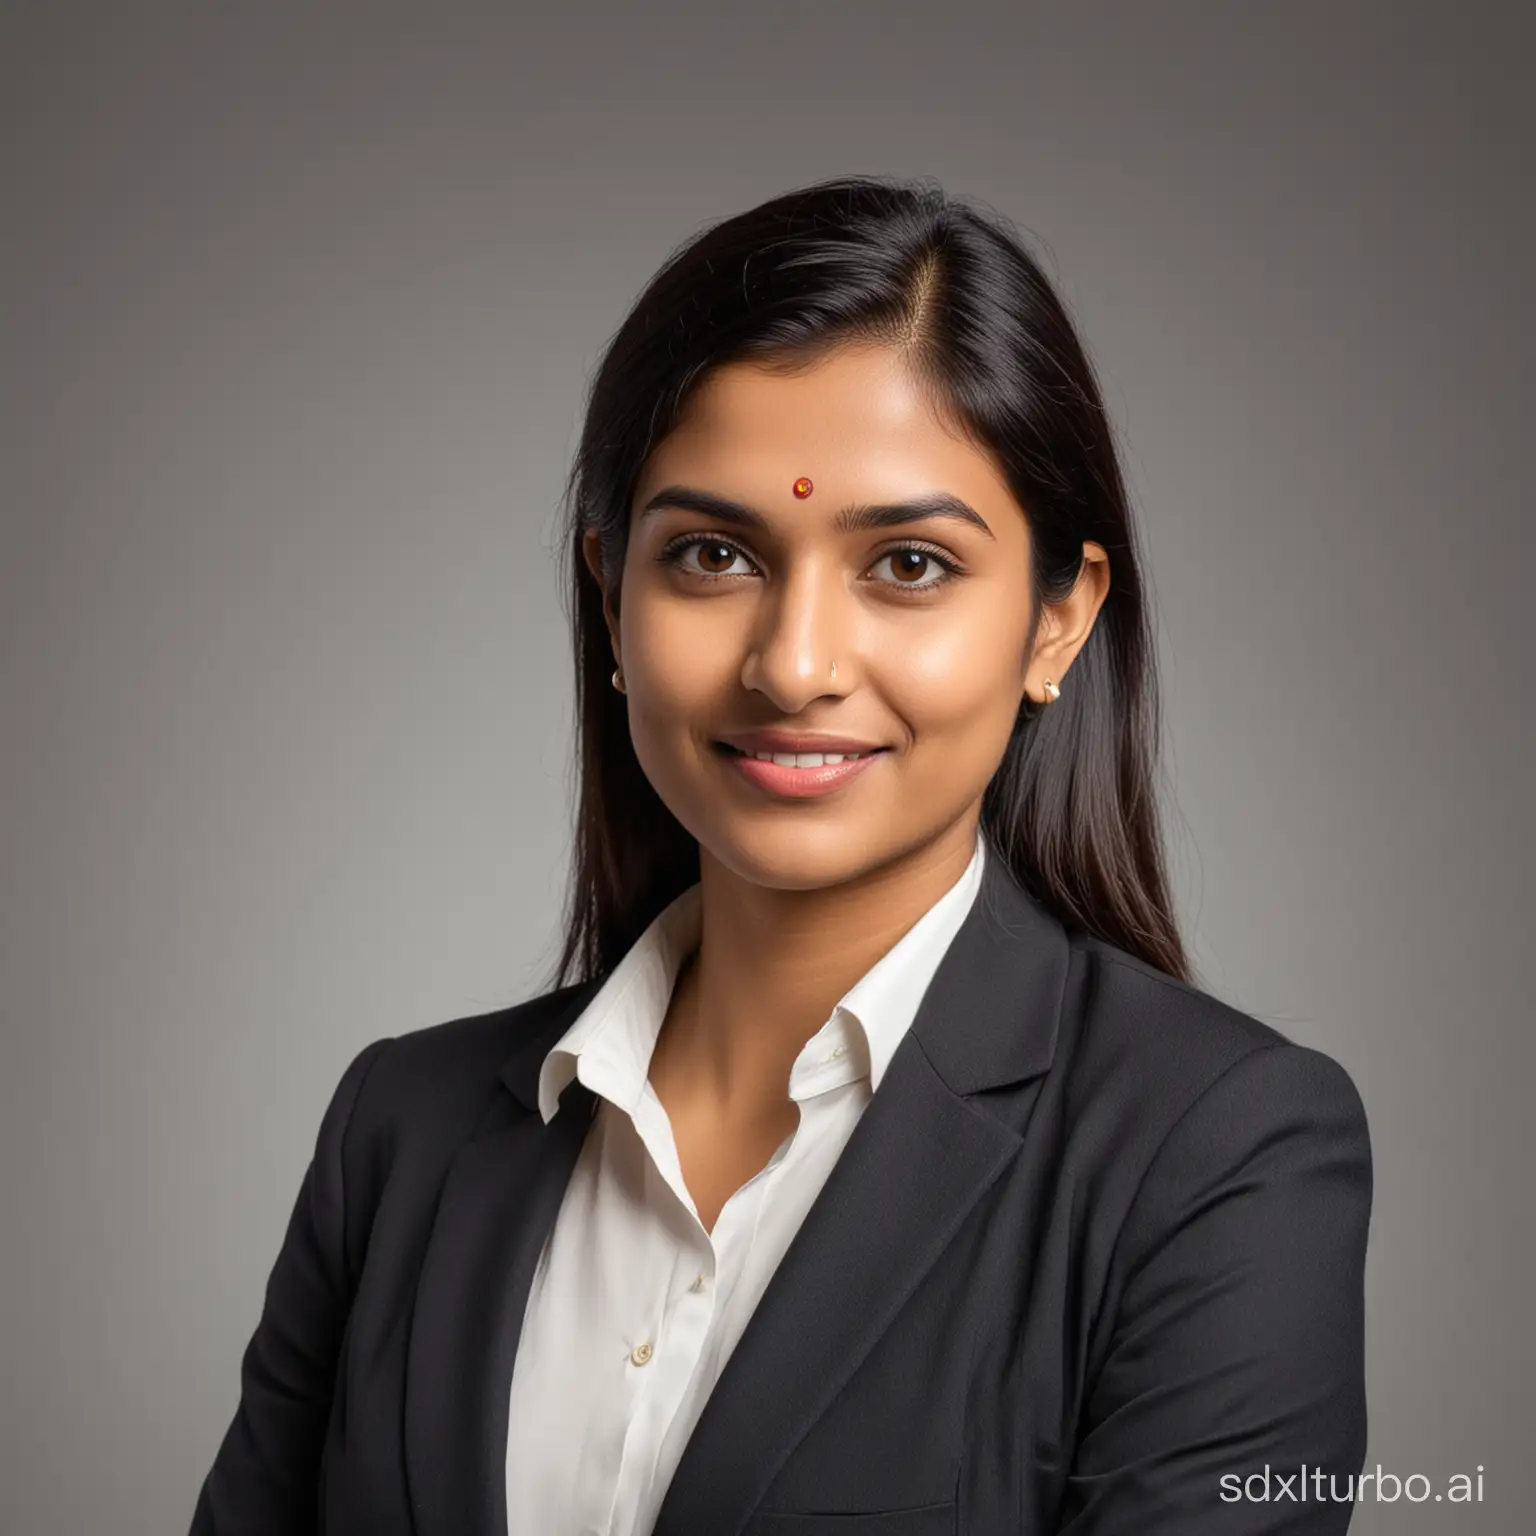 Professional-Indian-Woman-Office-Attire-Profile-Picture